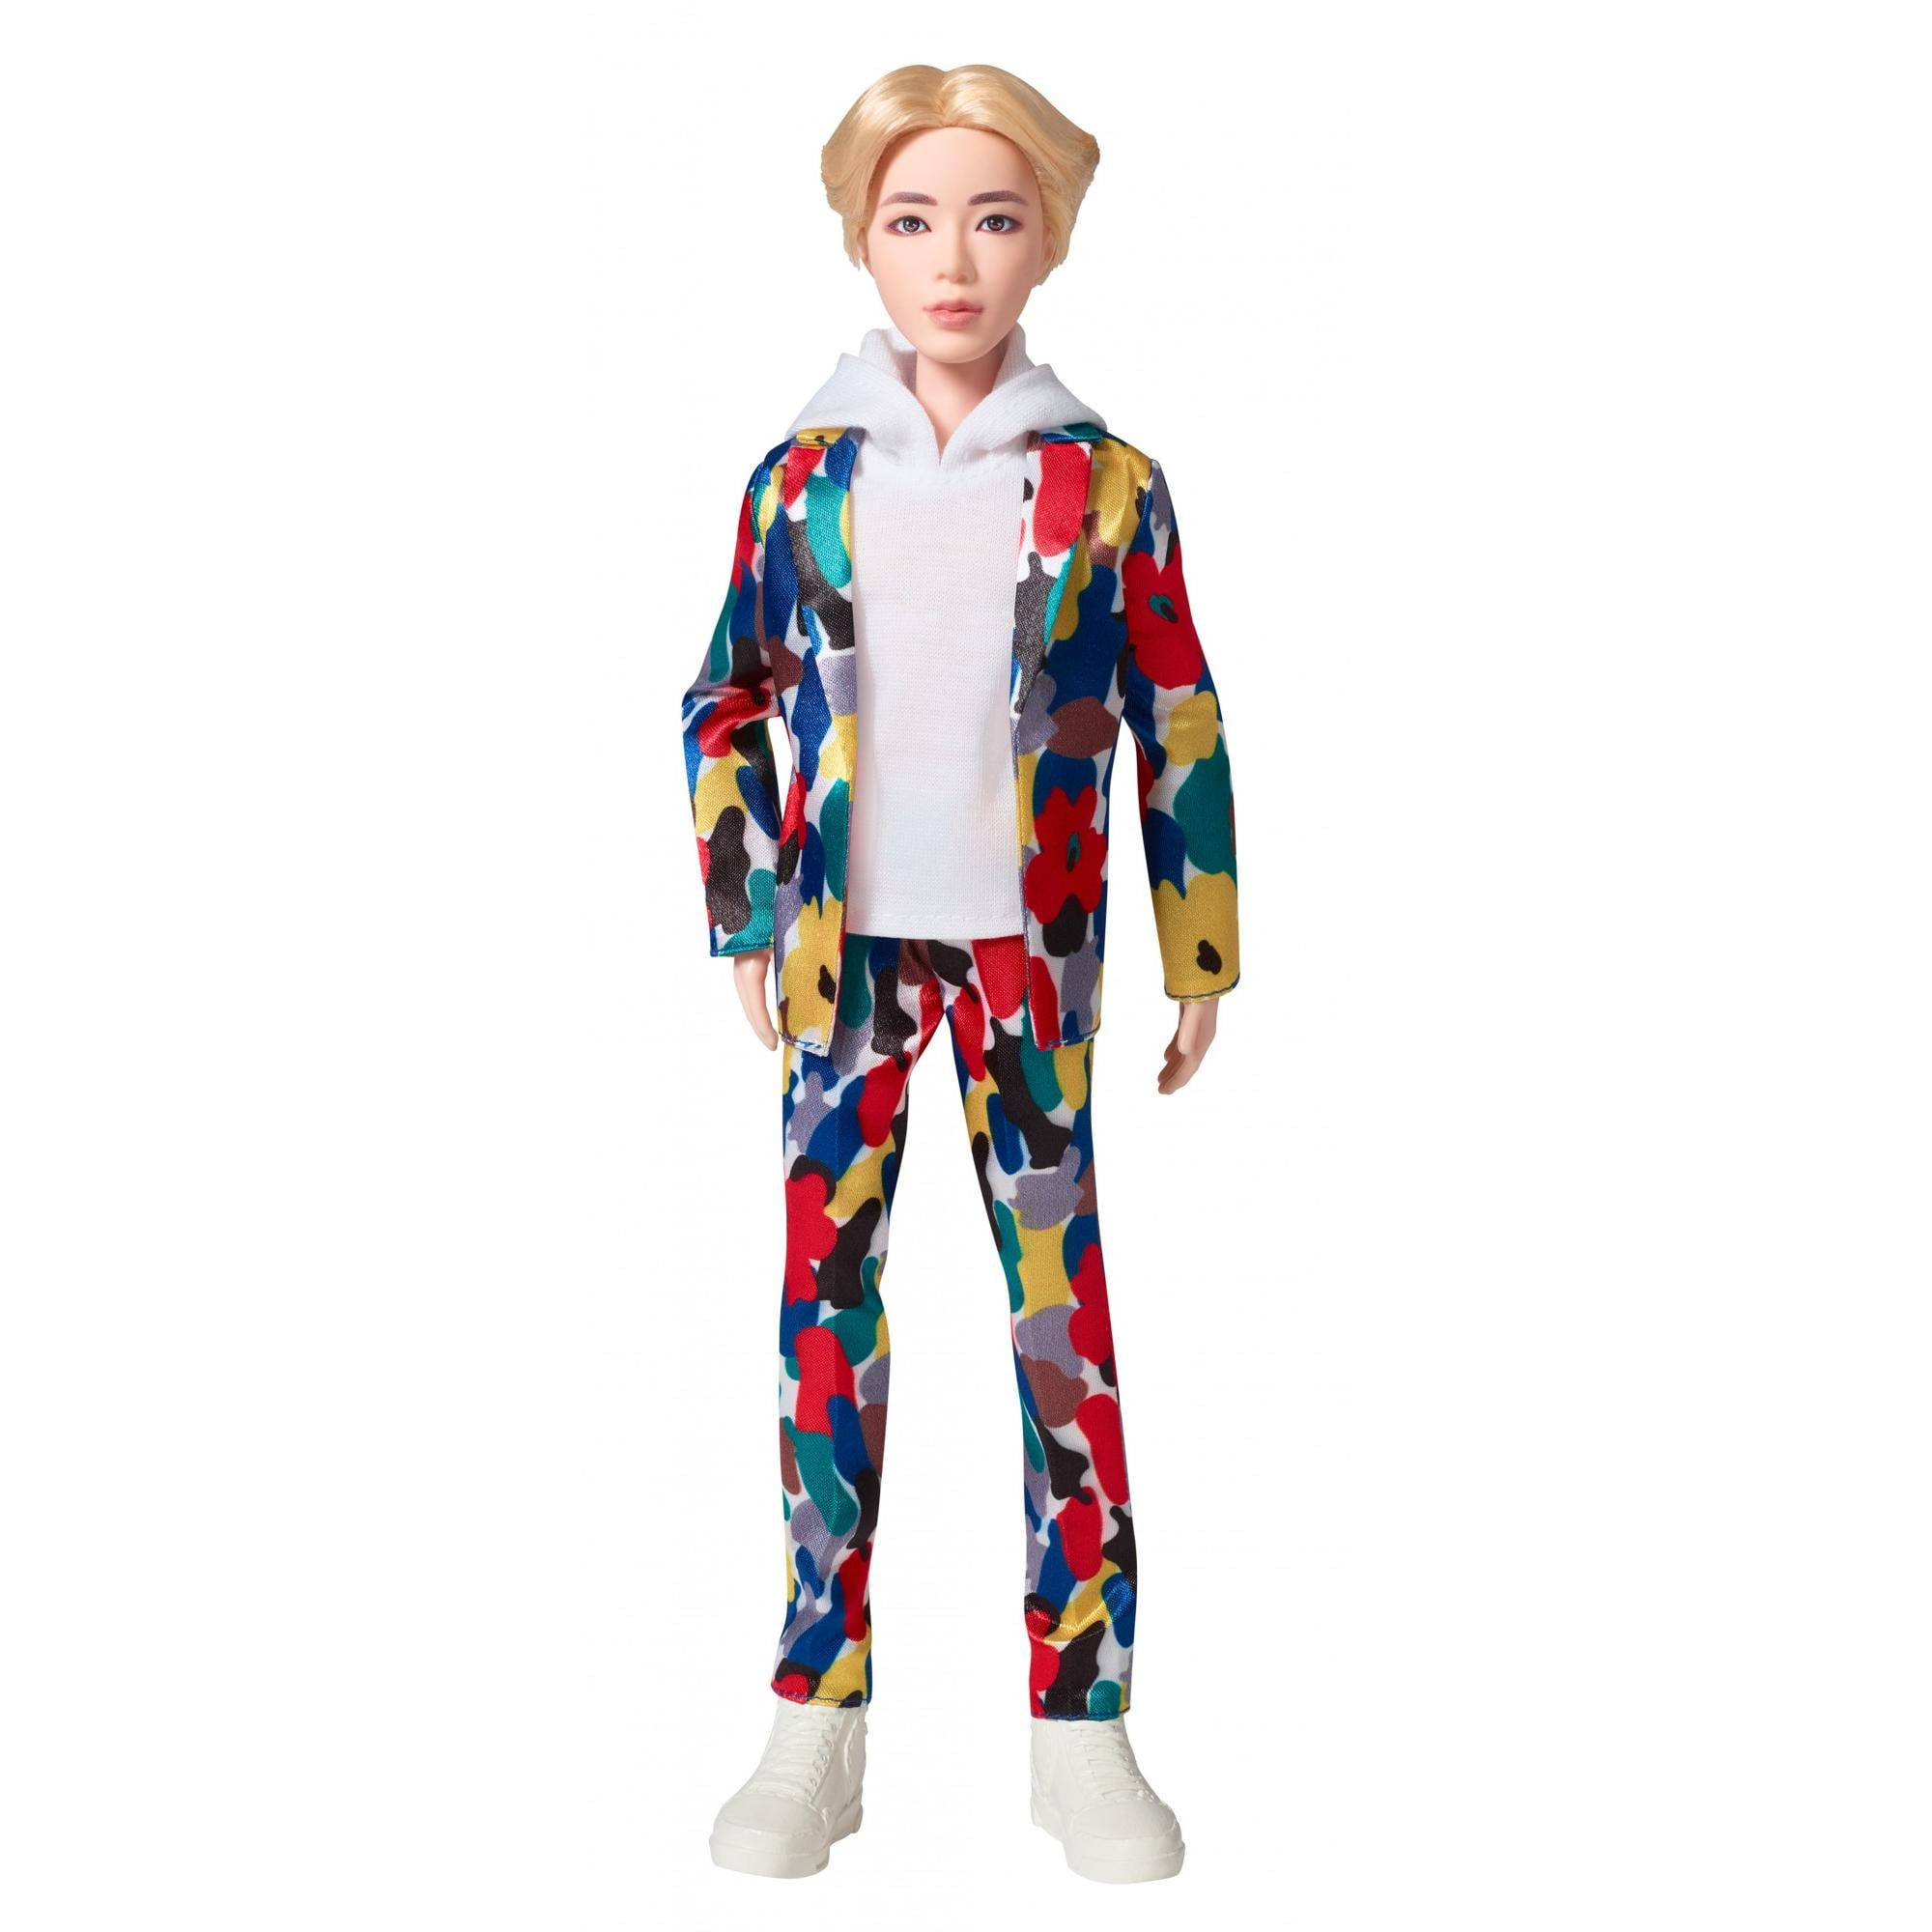 K-POP TOYS Merchandise FR MATTEL GKC88 BTS Jin Idol fashion bambola per collezionisti 